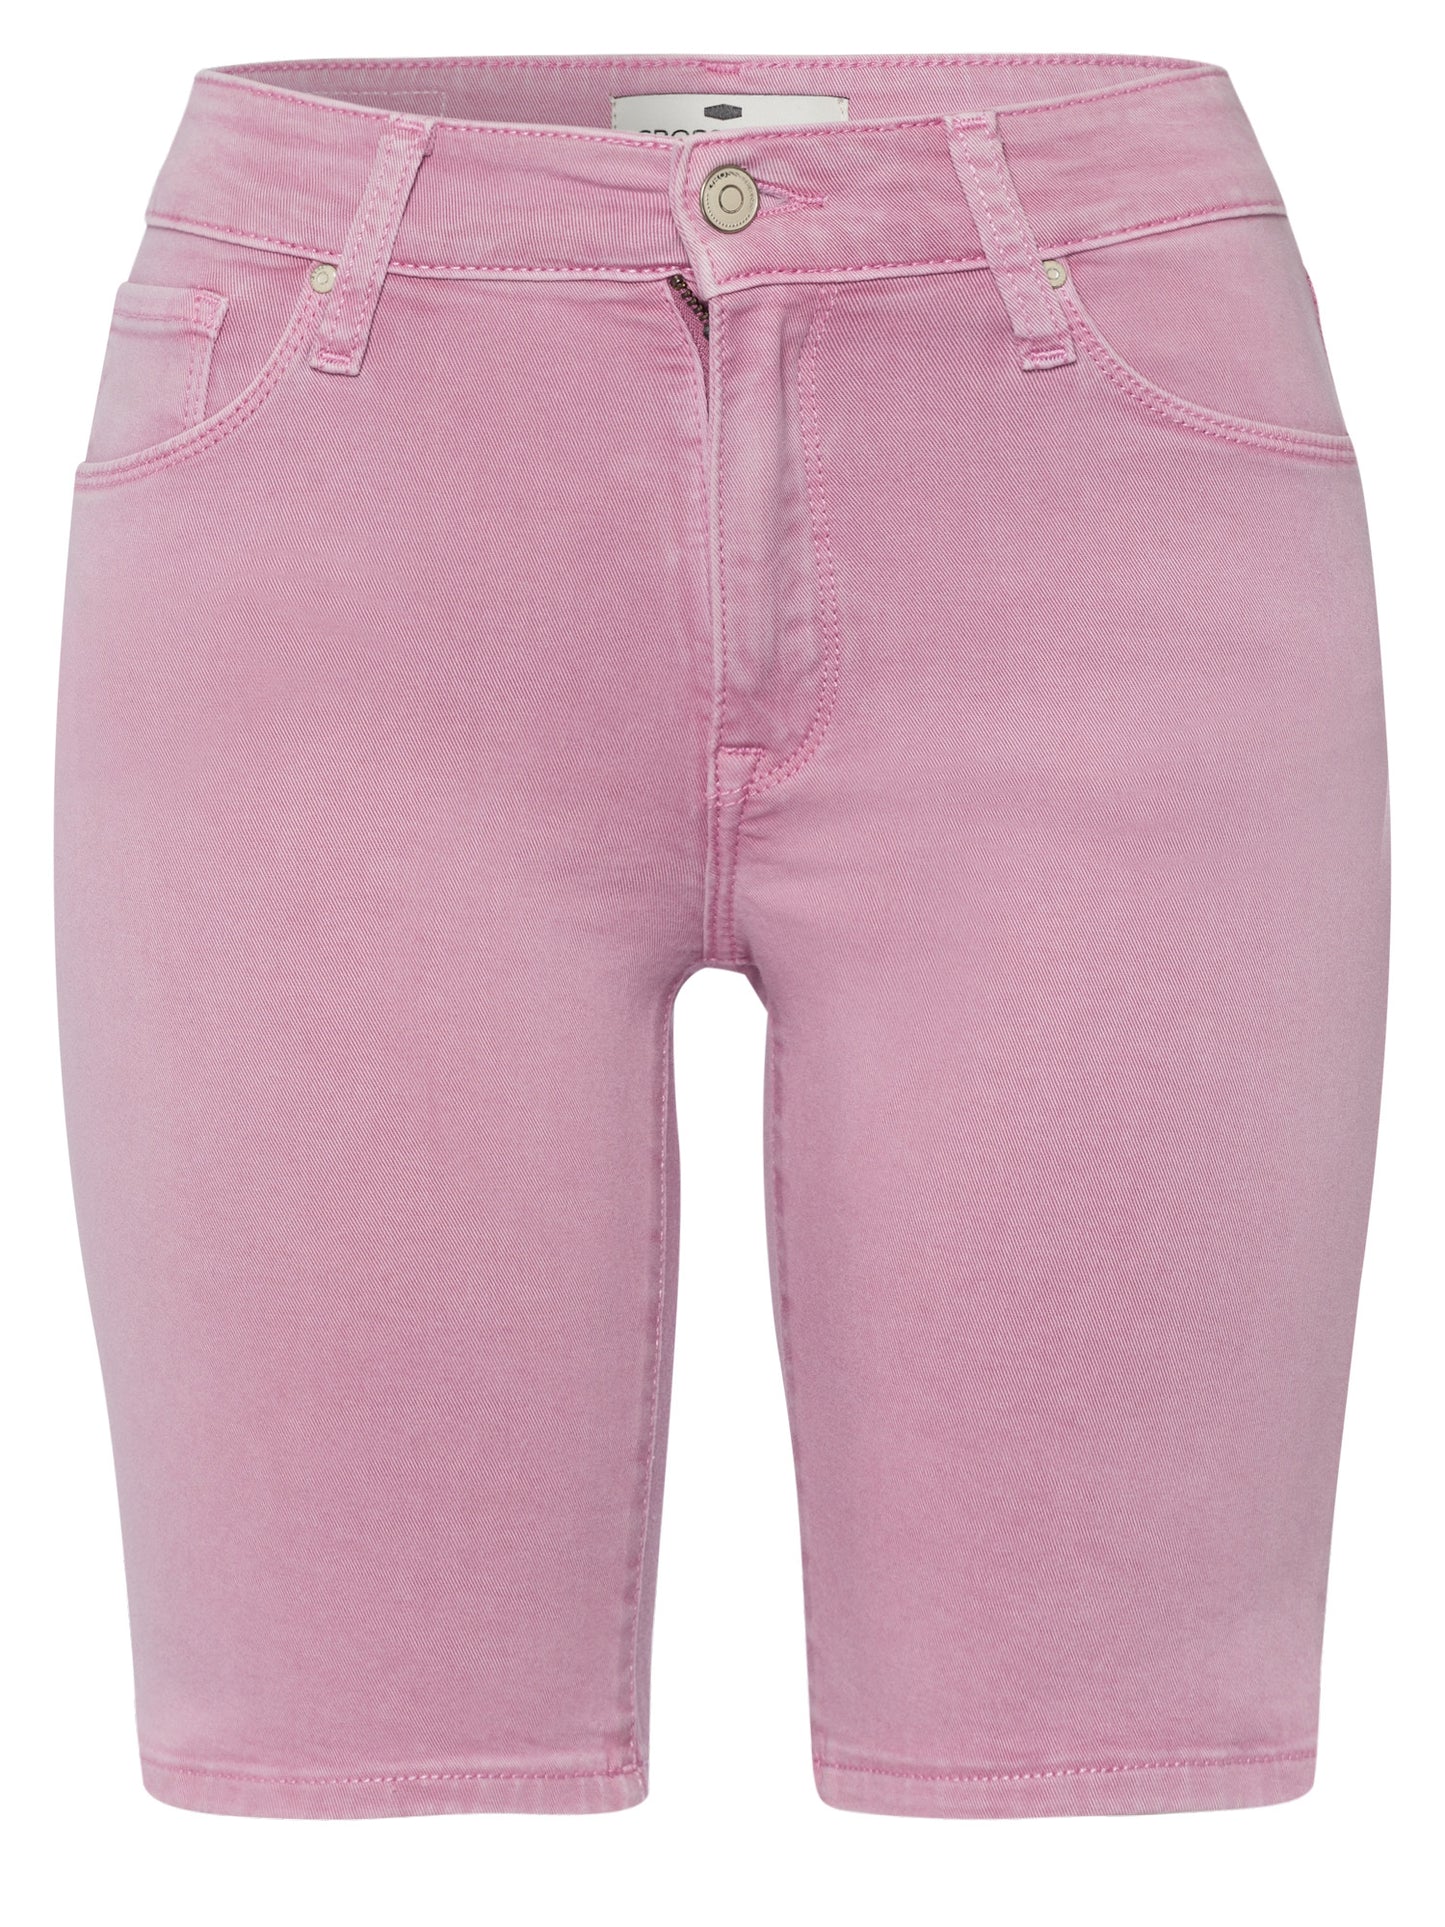 Damen Jeans Shorts Anya Slim Fit High Waist hell pink